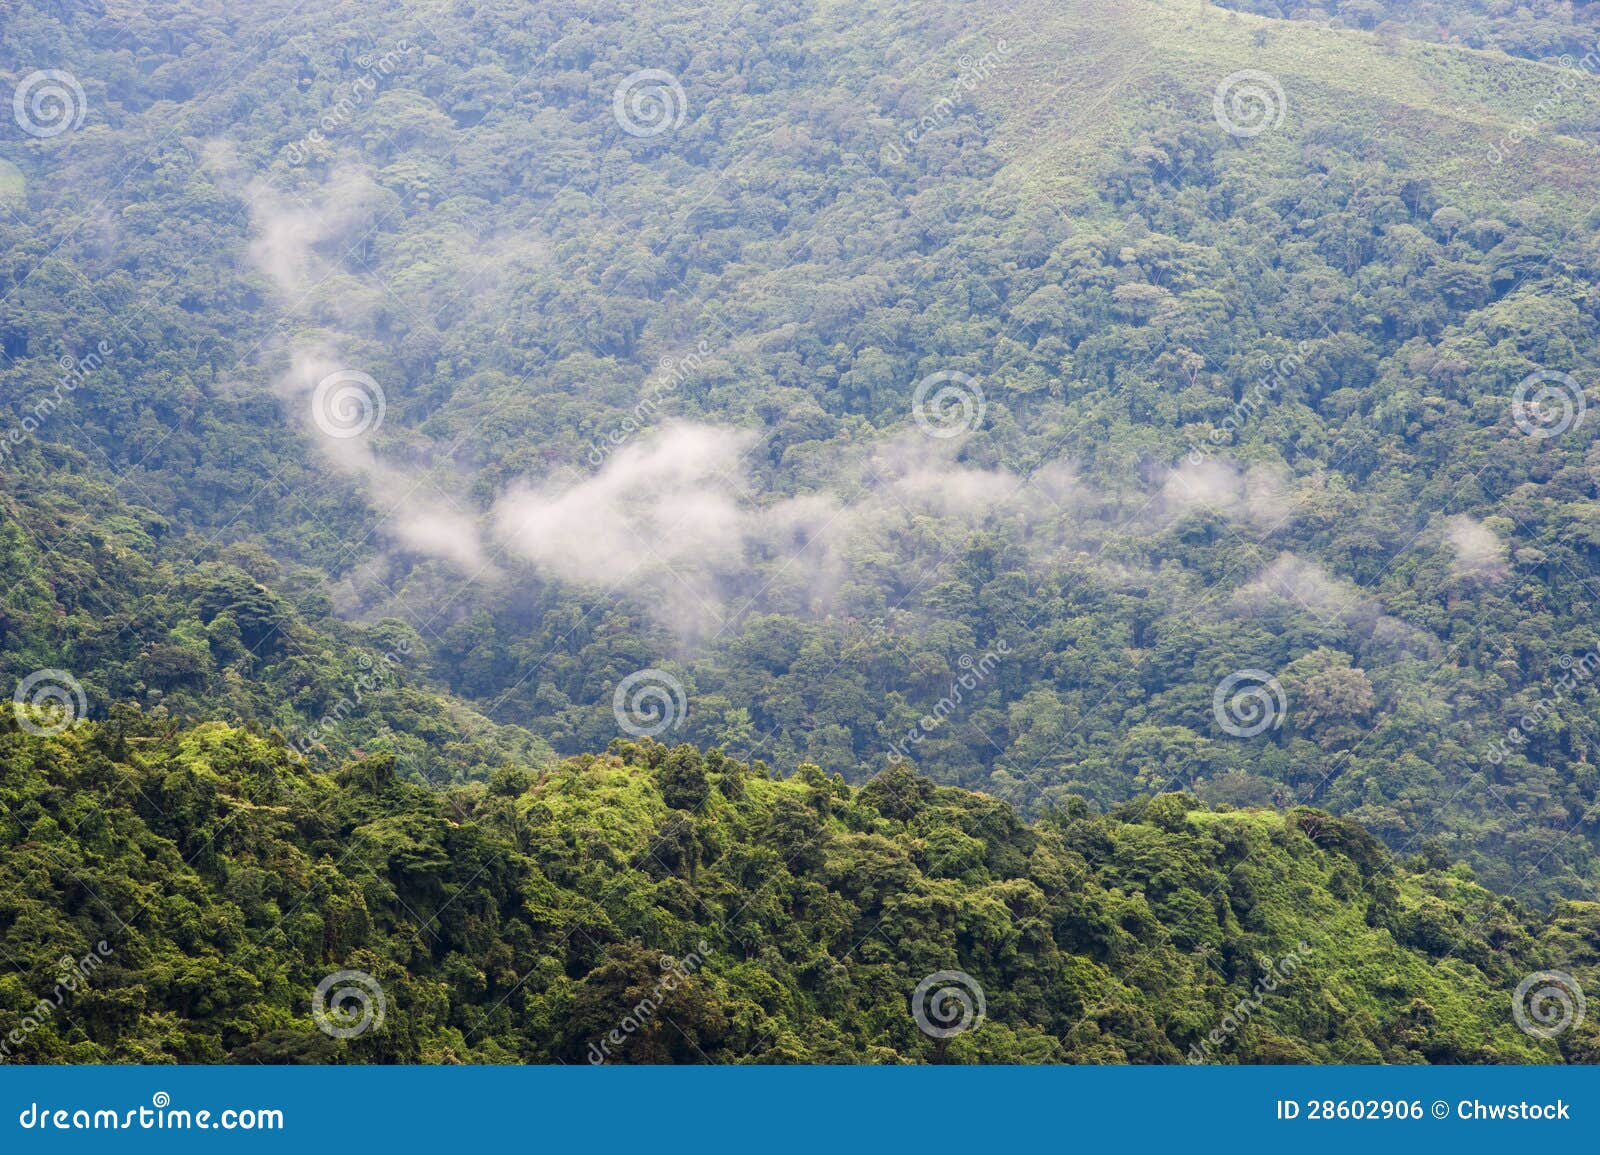 colombia - rainforest in the sierra nevada de santa marta